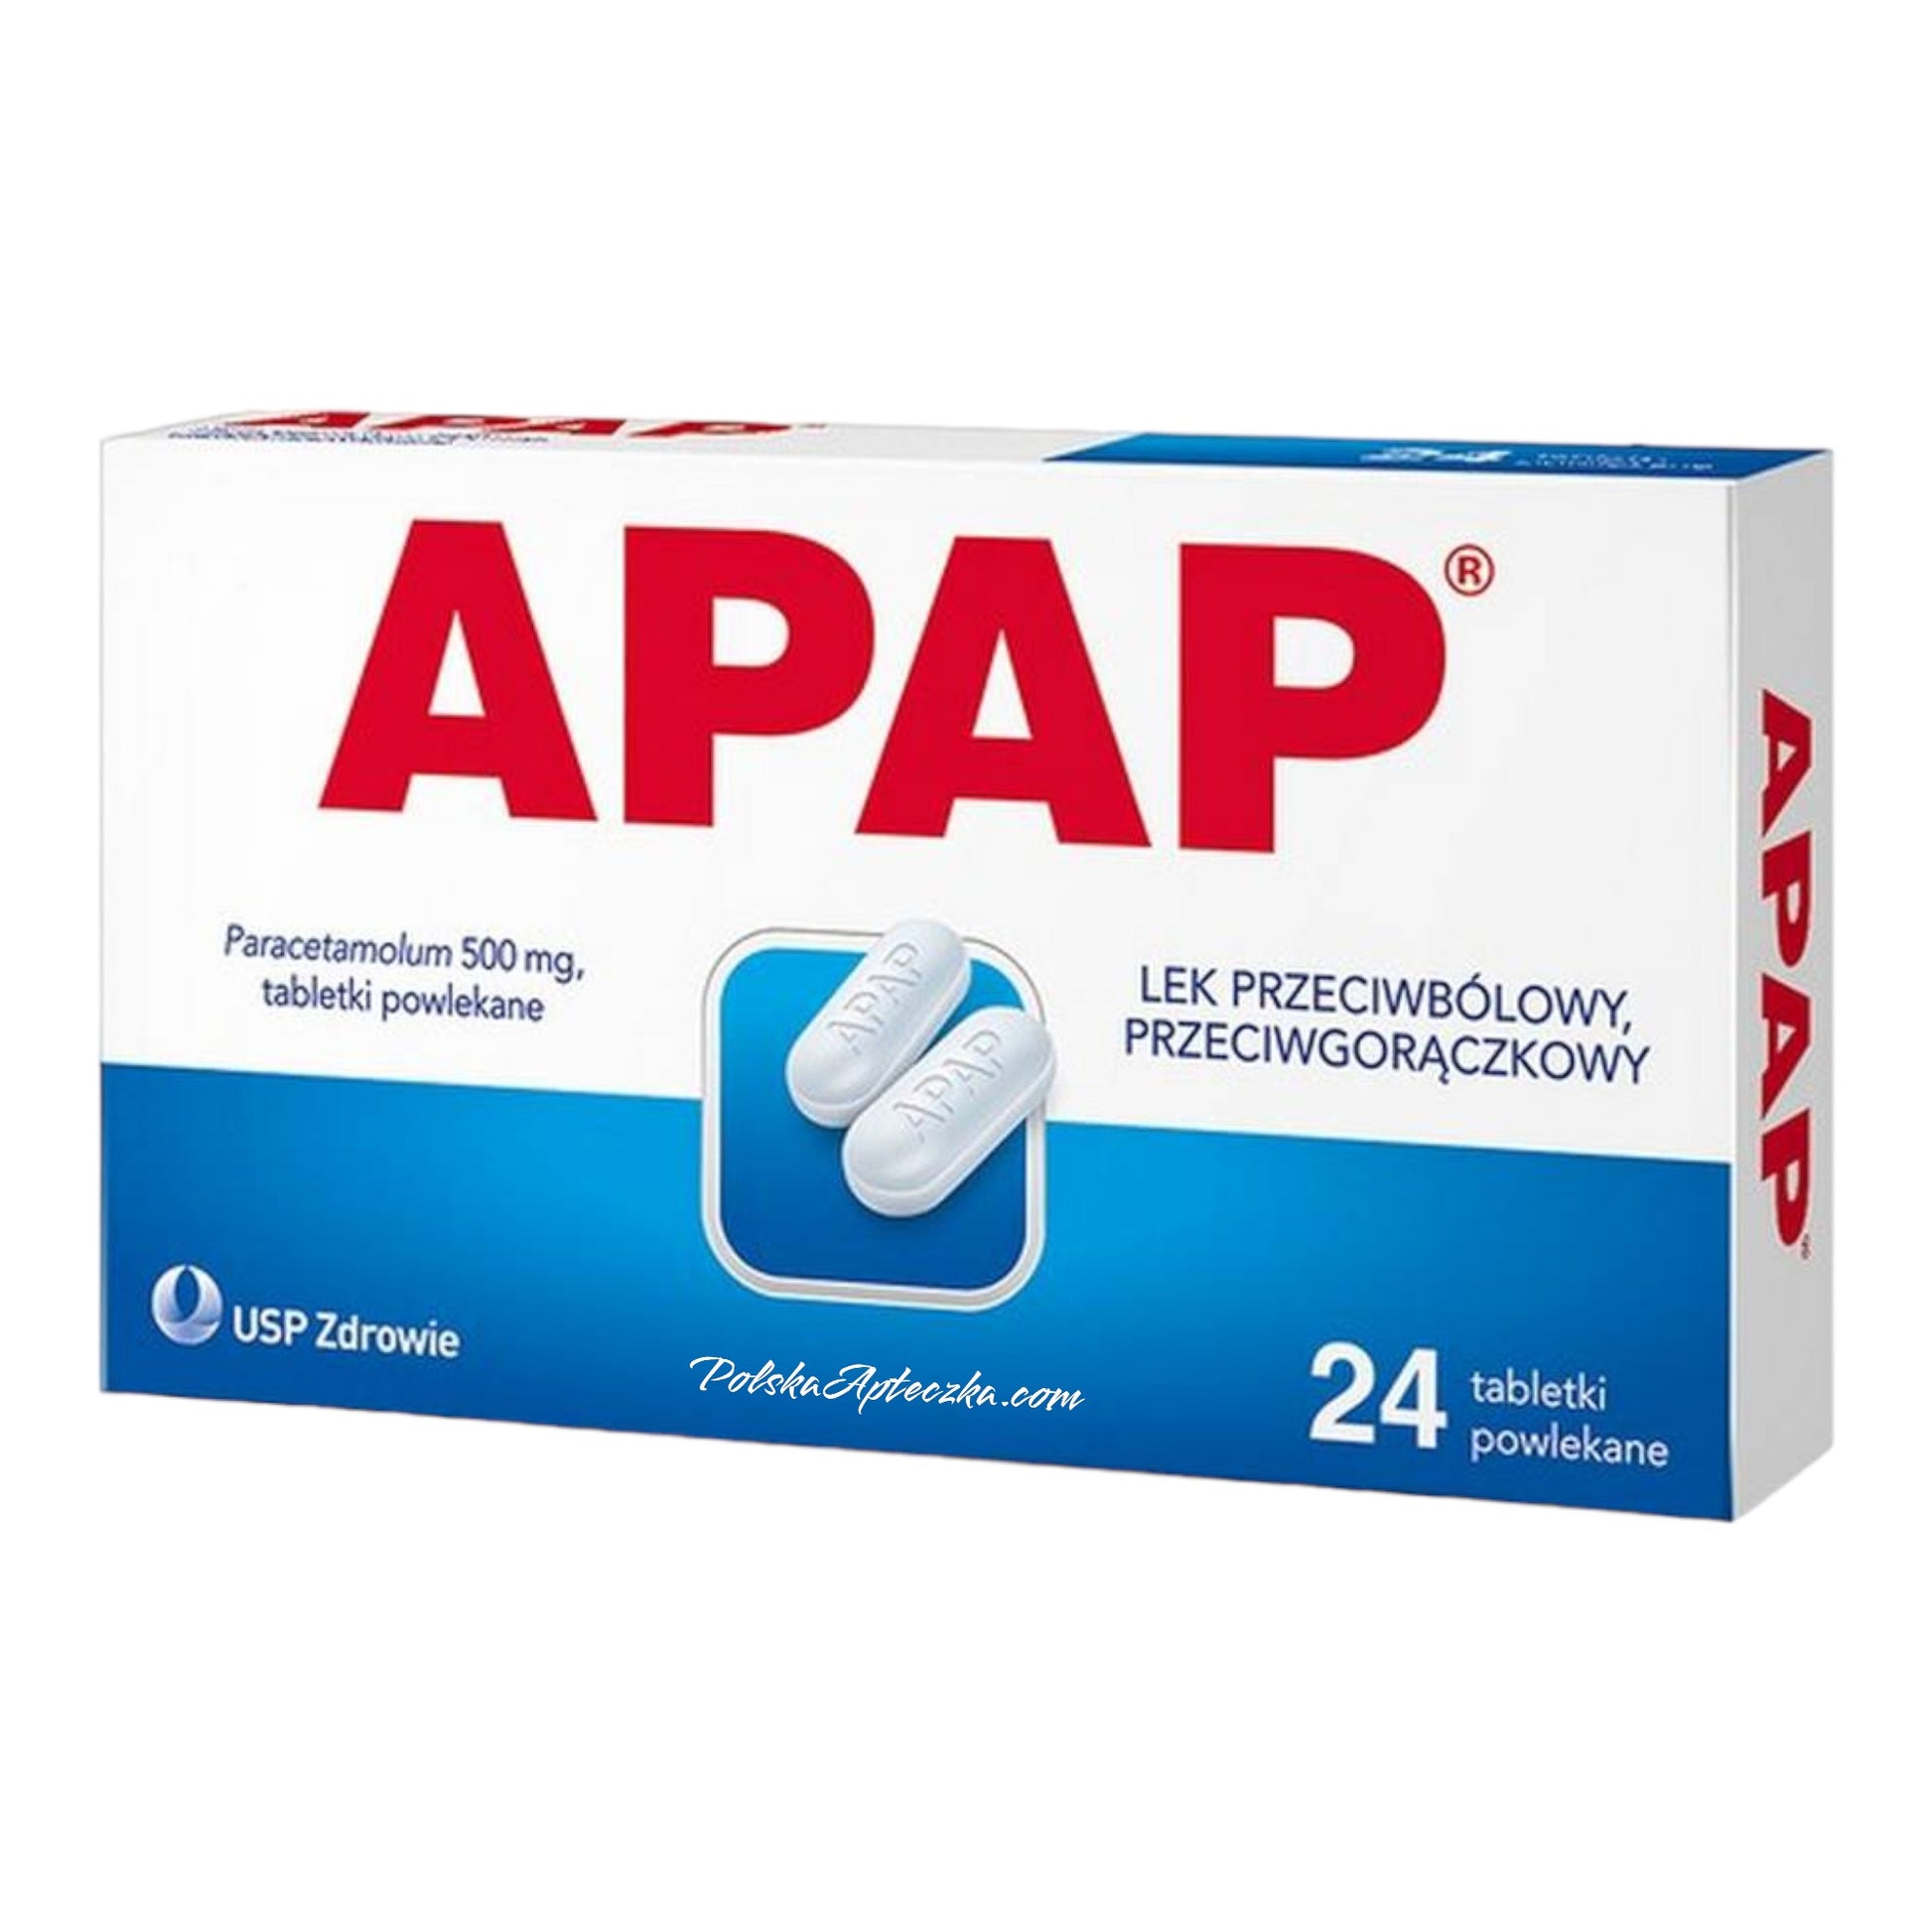 APAP paracetamol tablets